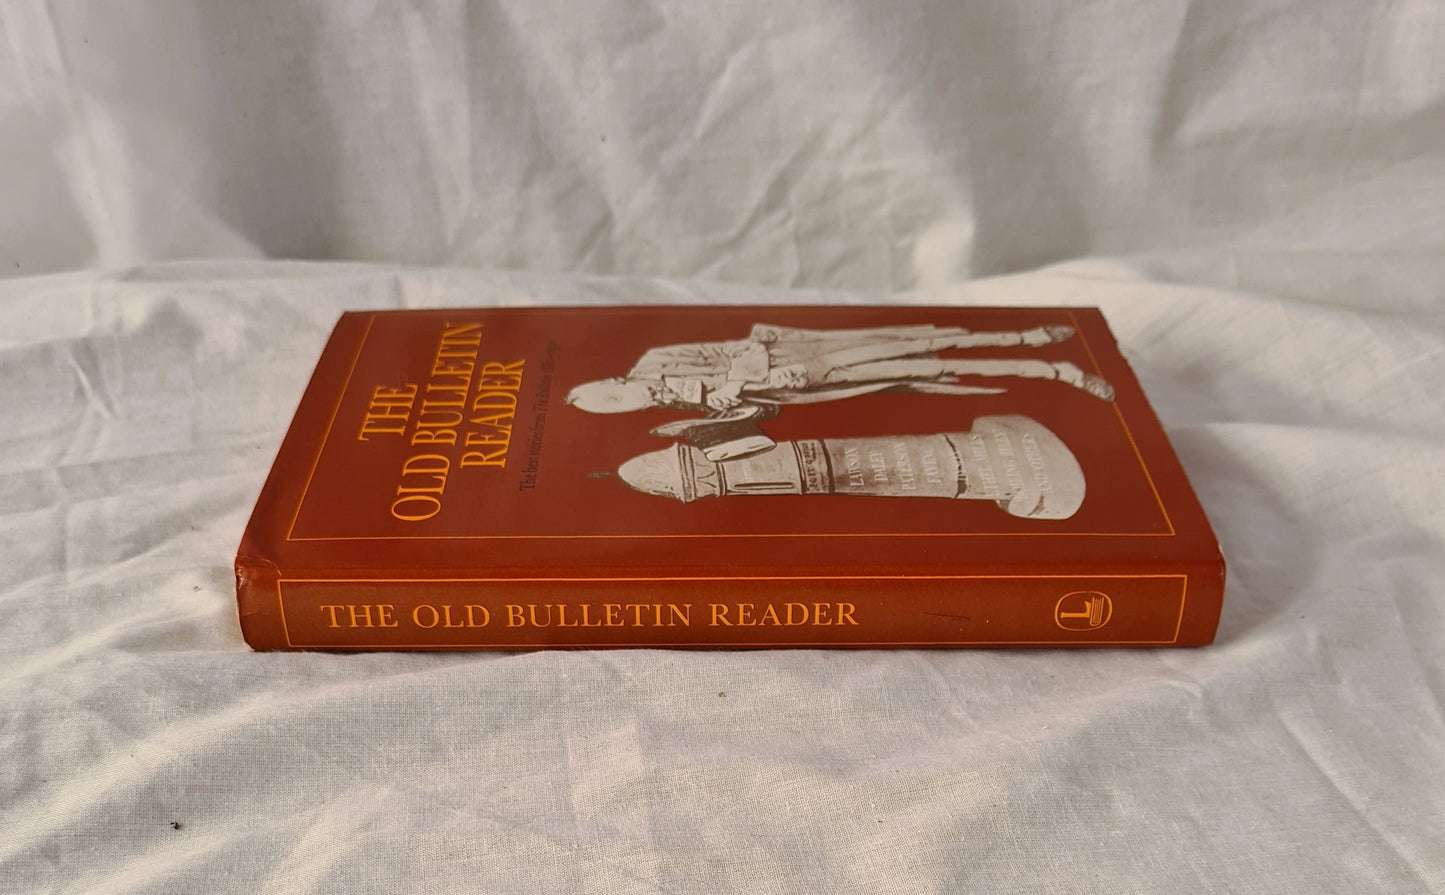 The Old Bulletin Reader